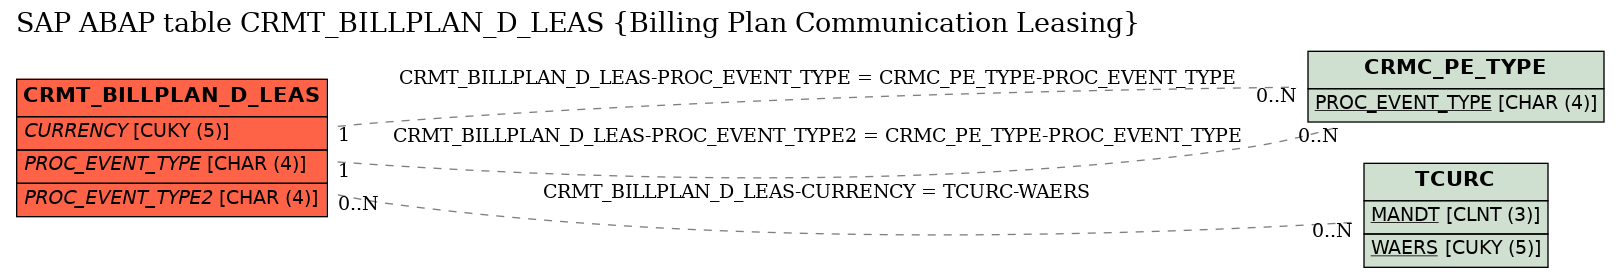 E-R Diagram for table CRMT_BILLPLAN_D_LEAS (Billing Plan Communication Leasing)